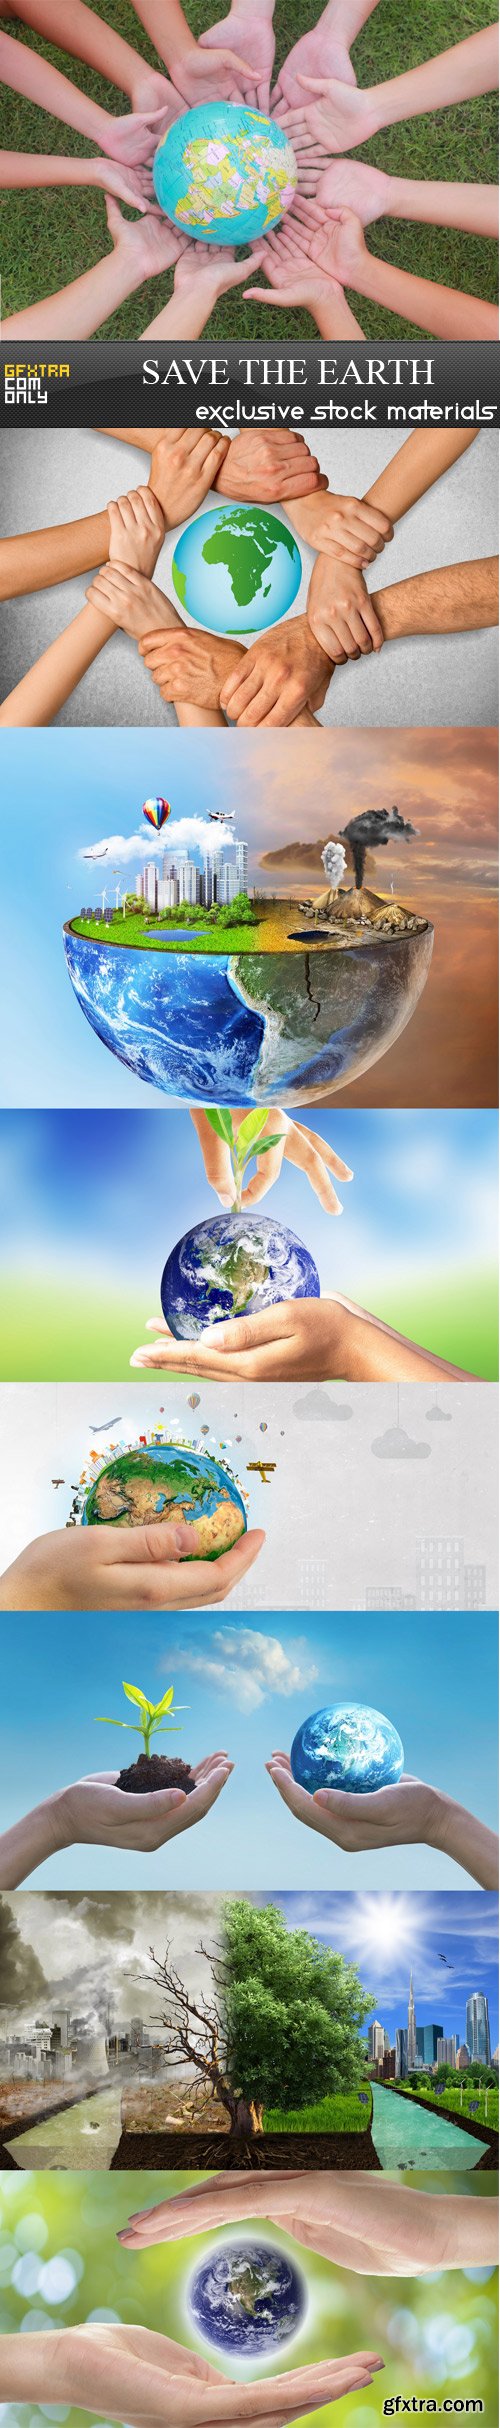 Save the Earth - 8 UHQ JPEG